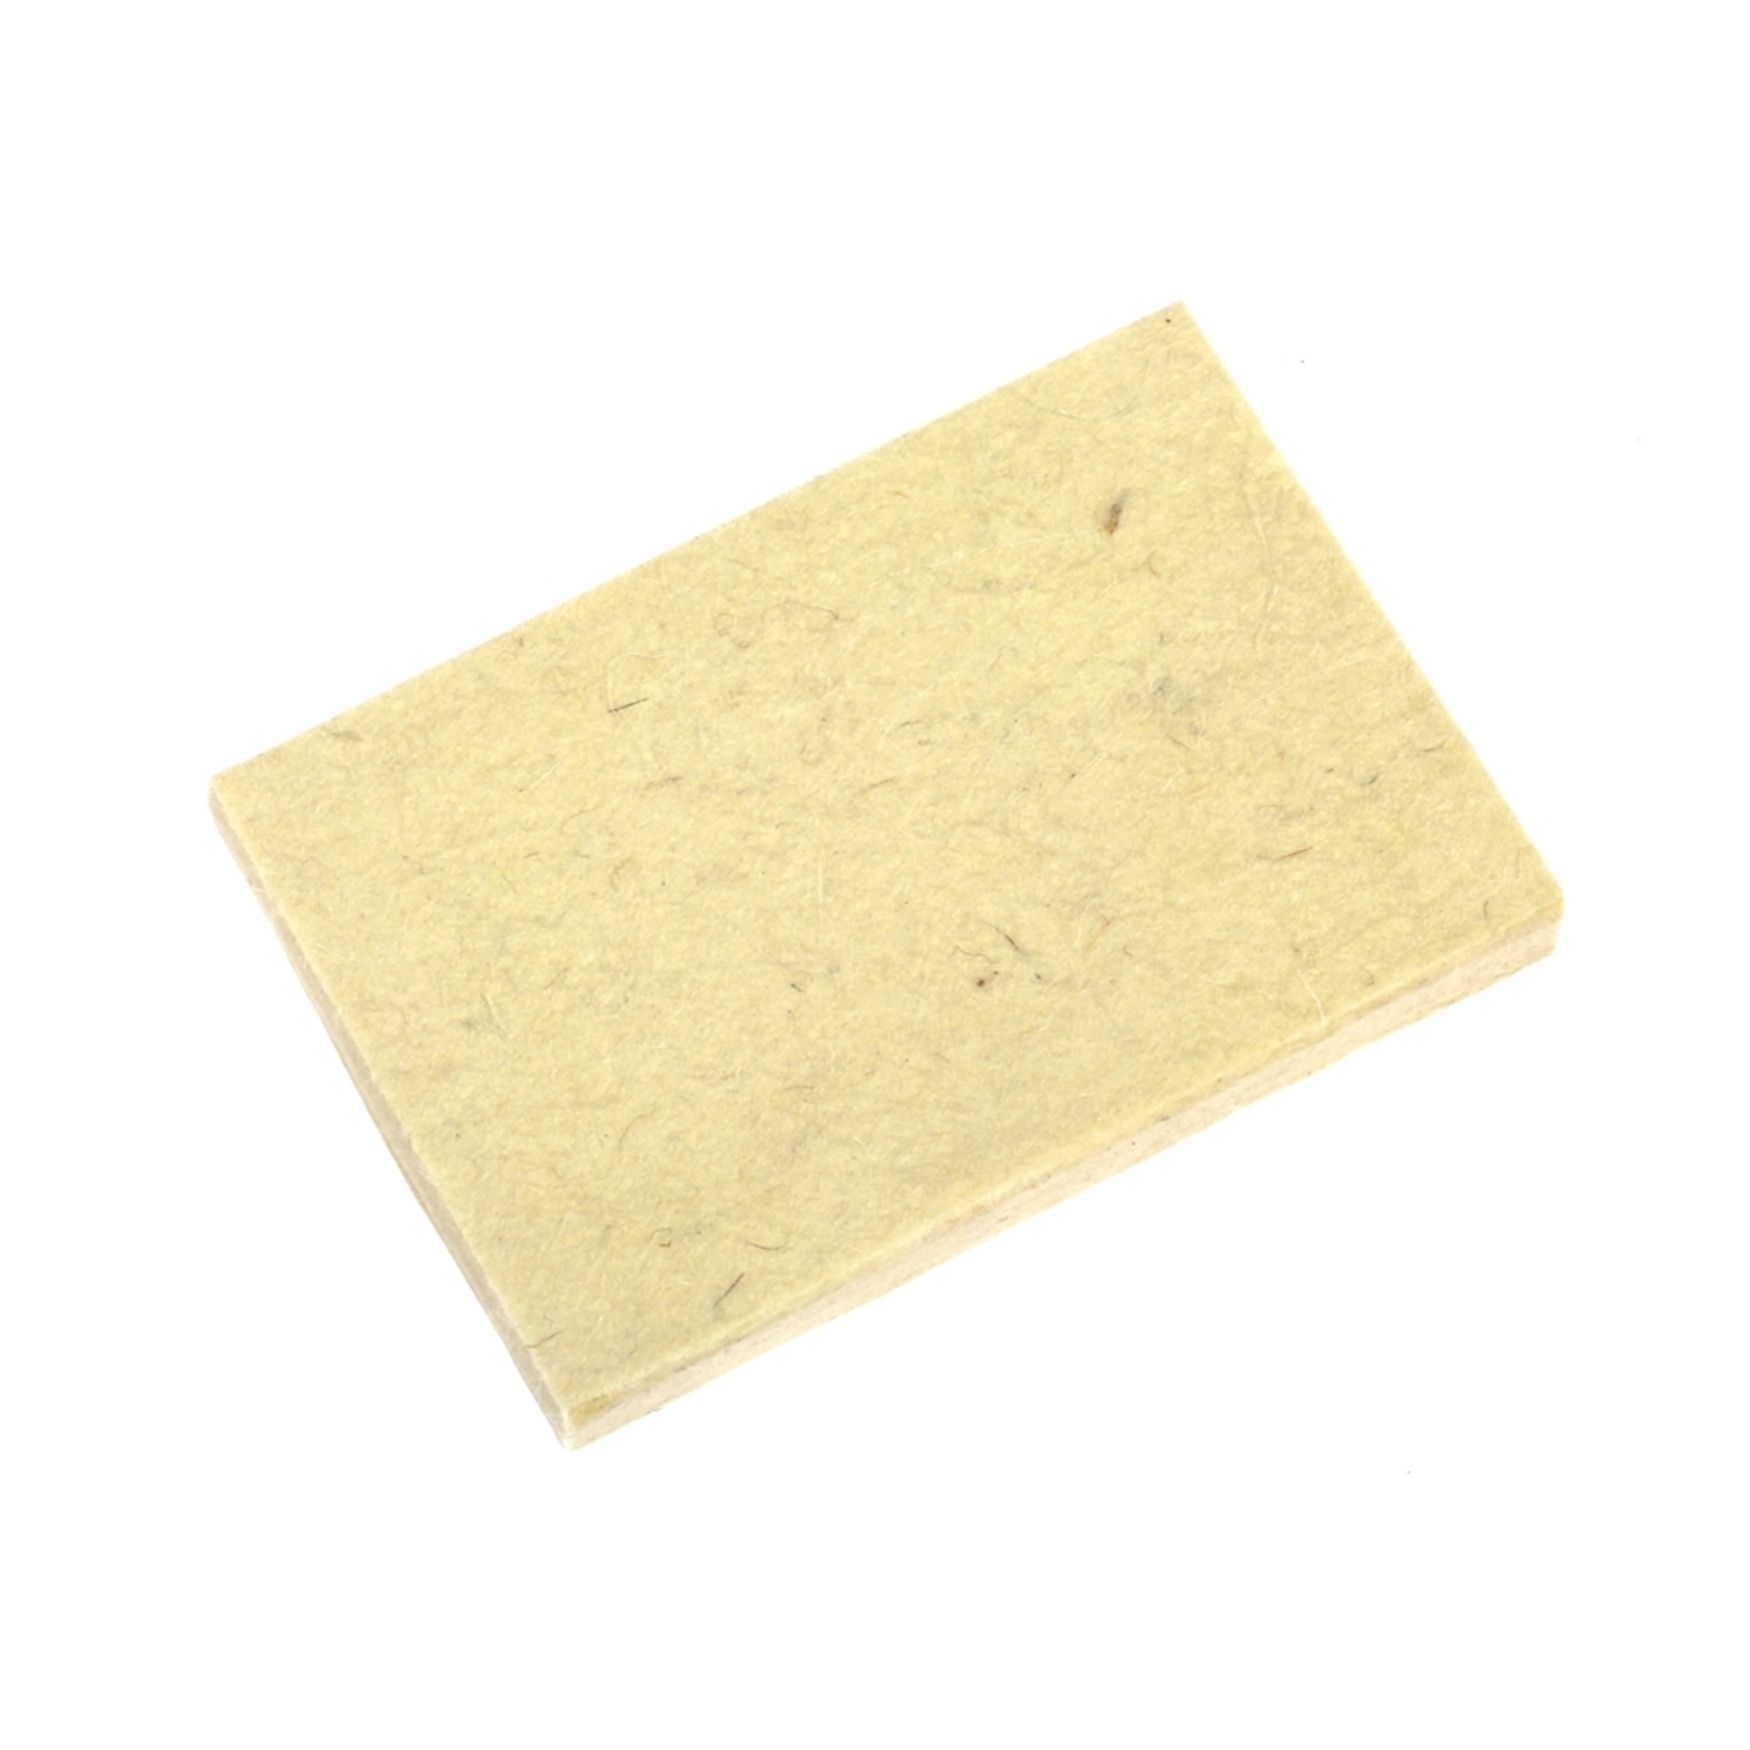 EHDIS Vinyl Squeegee Buffer Tape Squeegee Fabric Felt Pre-Cut Self-Adhesive Microfiber Felt for Squeegee Application Tool EVA Layer Non-Scratch Soft Smooth Felt 20pcs/Pack 